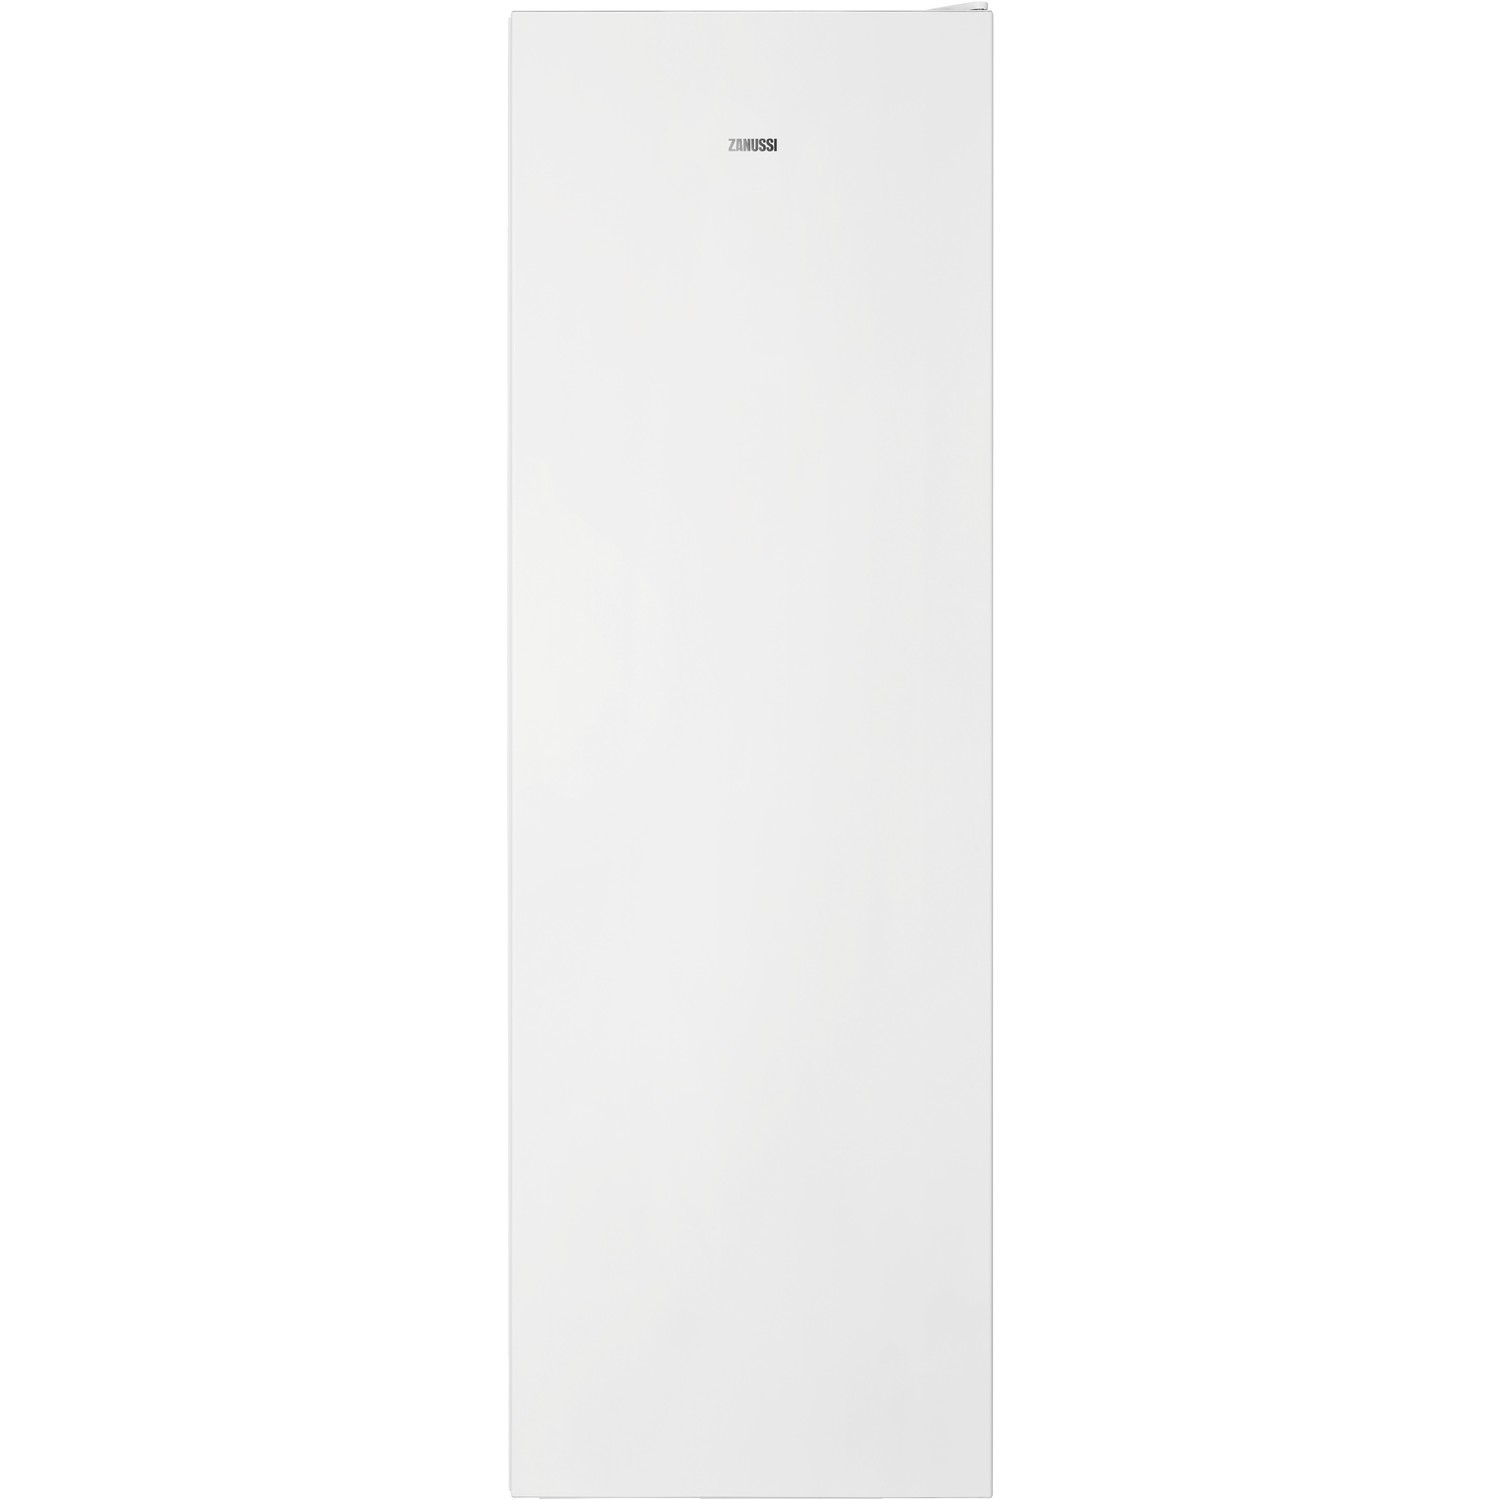 Zanussi 307 Litre Tall Freestanding Freezer - White